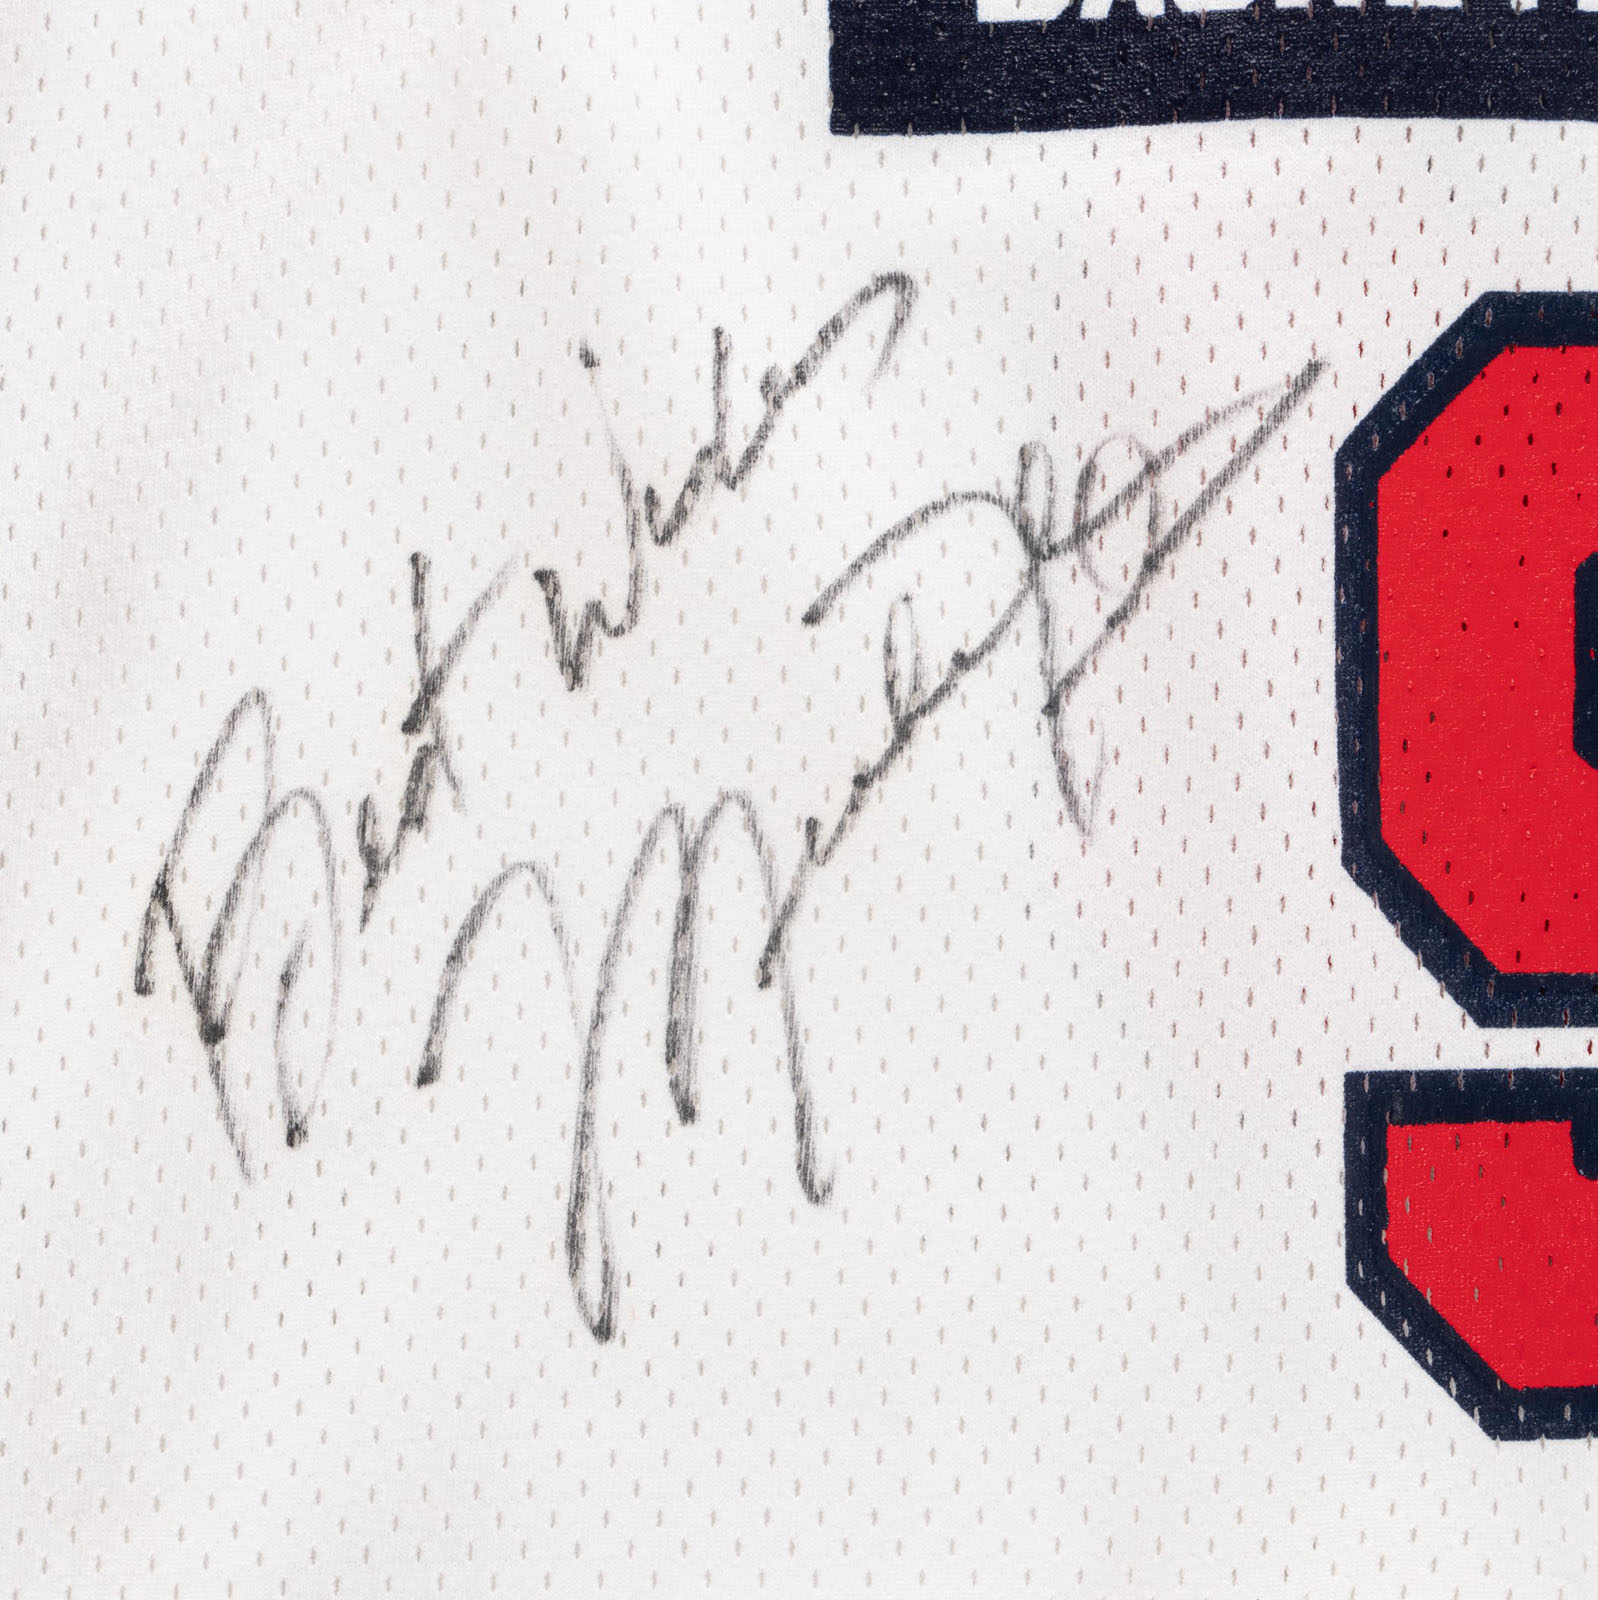 1992 USA Basketball the Dream Team signed jersey Michael Jordan, Scott –  Awesome Artifacts